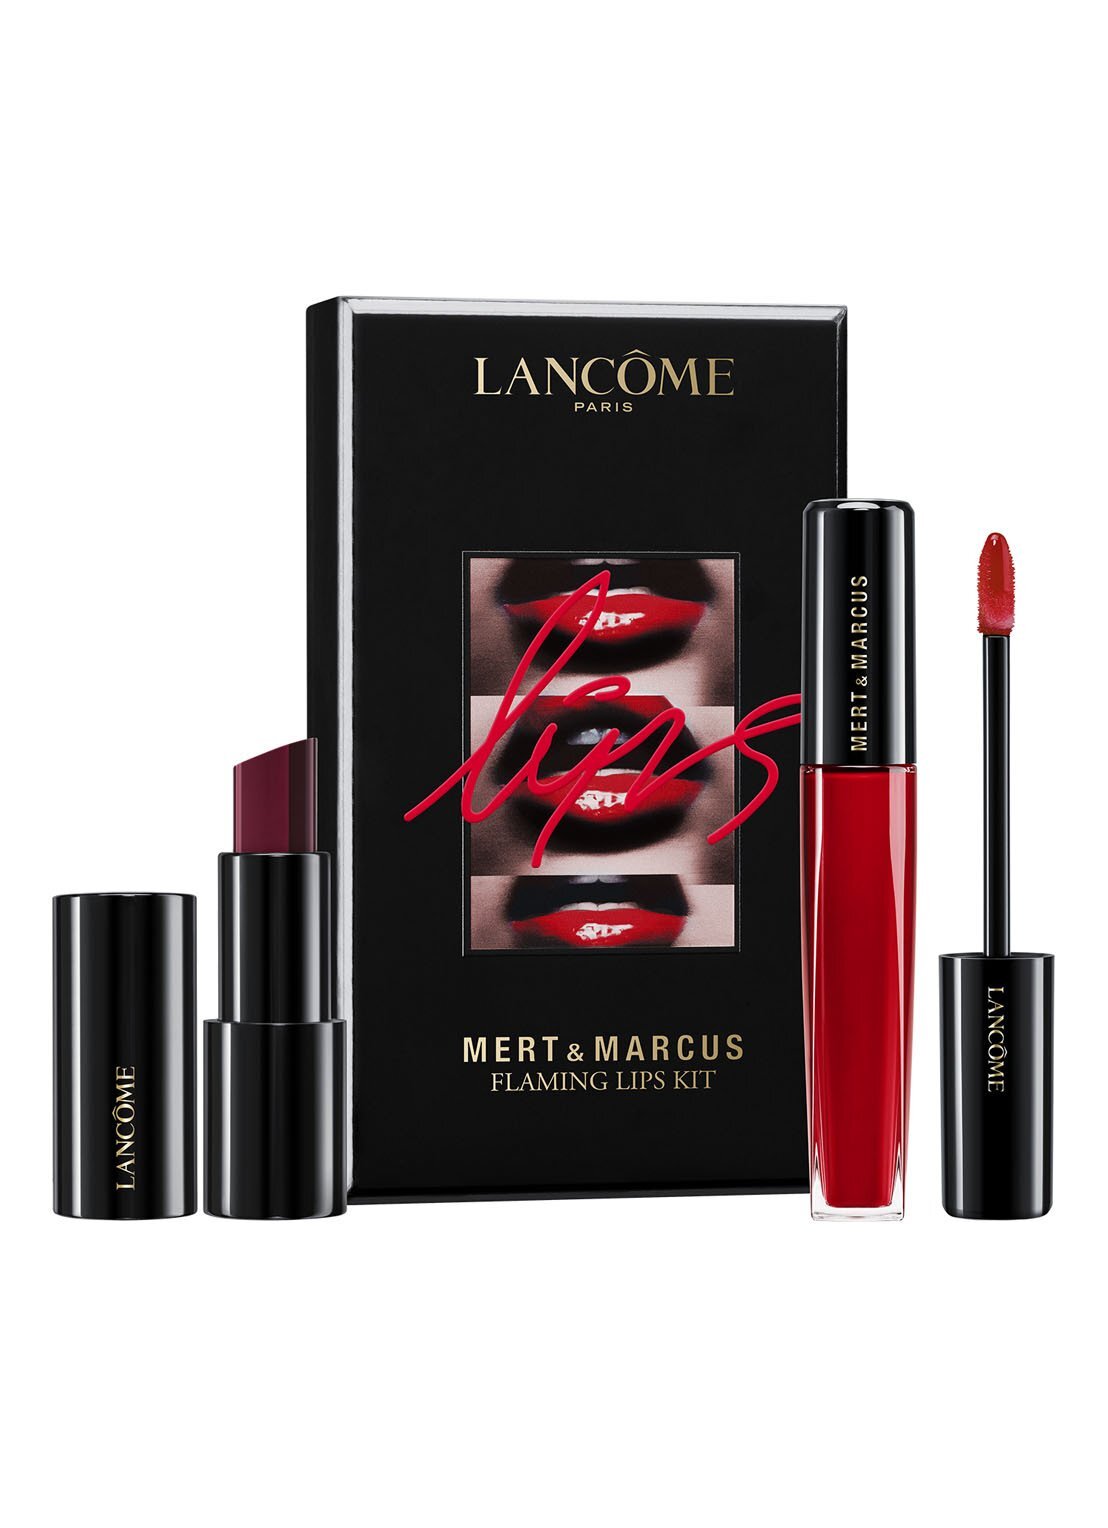 Lancôme Mert & Marcus Flaming Lips Kit Red - Limited Edition lipmake-up set